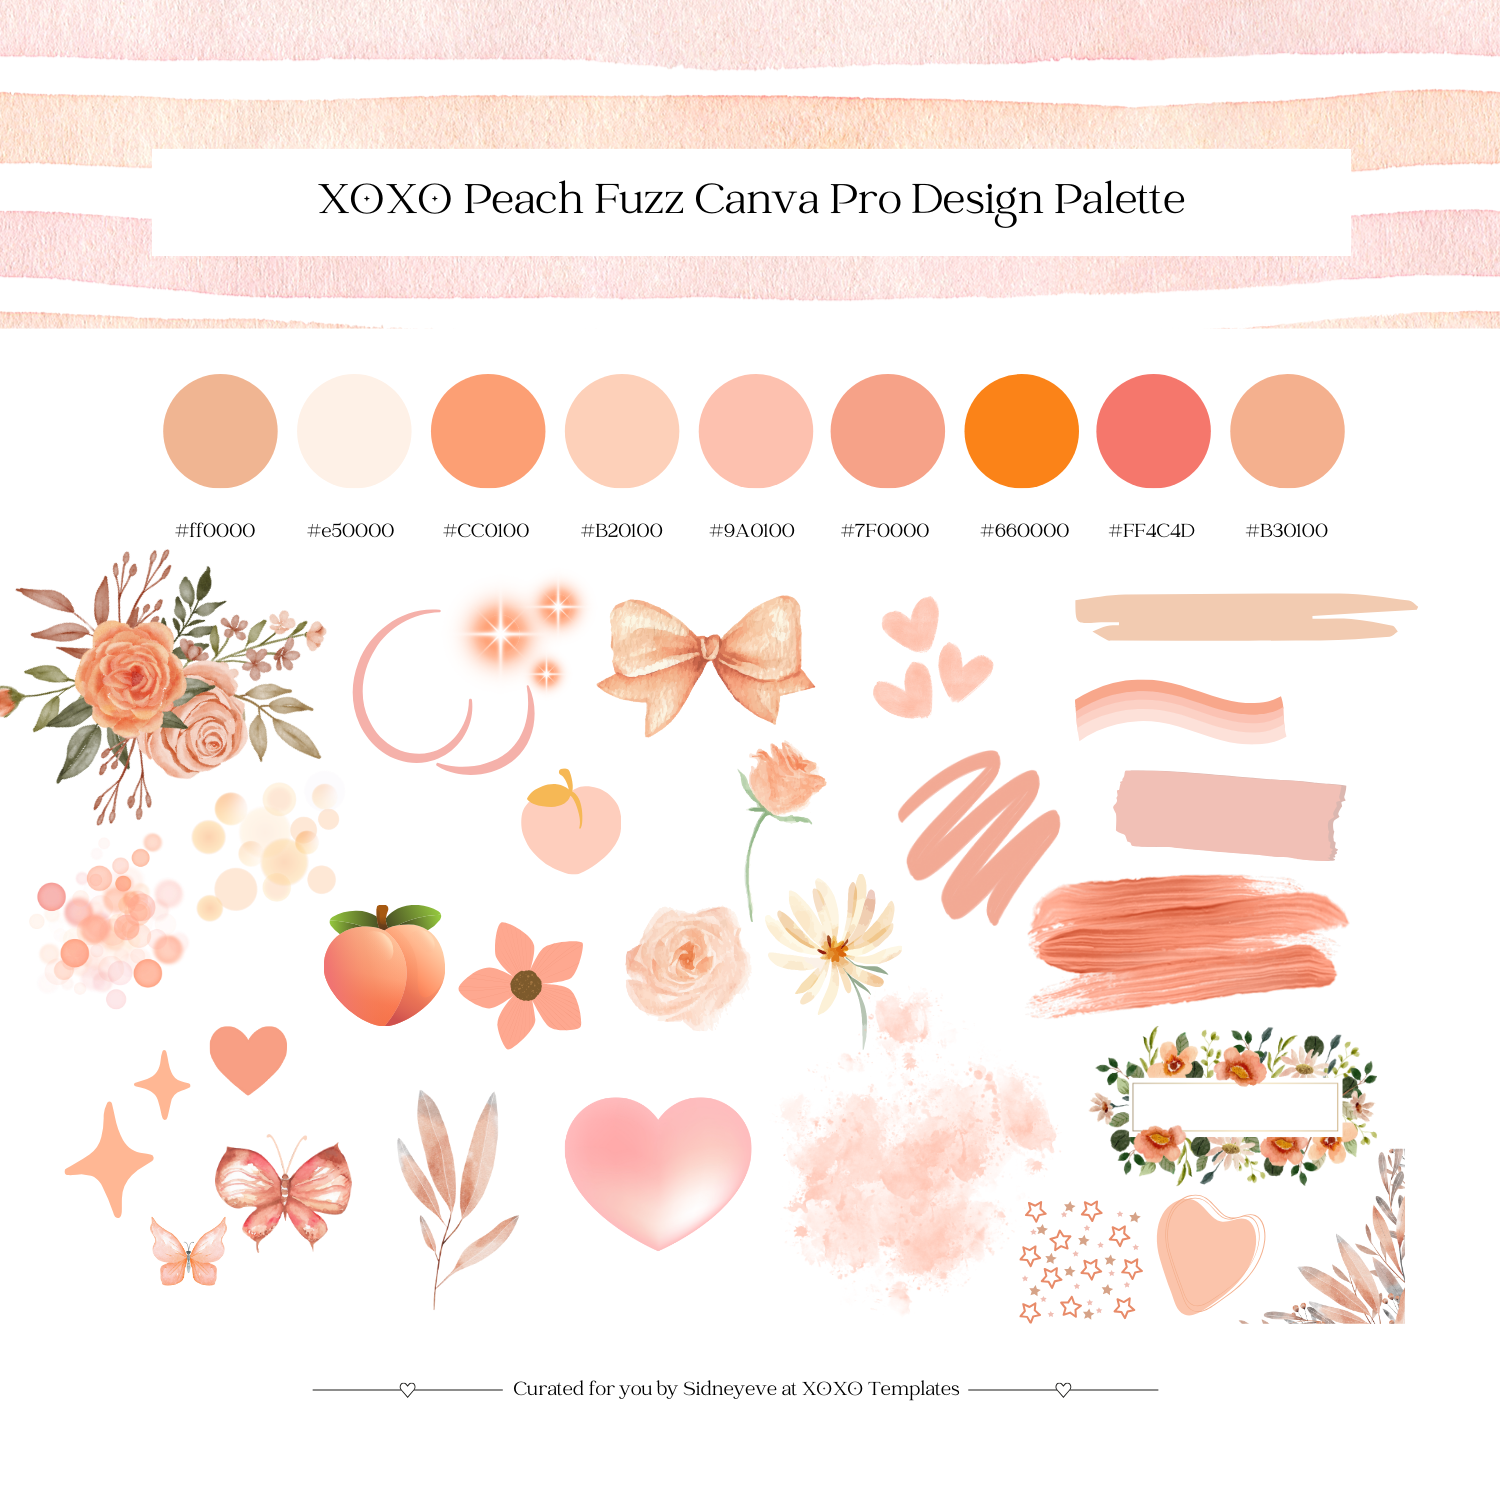 XOXO Peach Fuzz Canva Design Palette